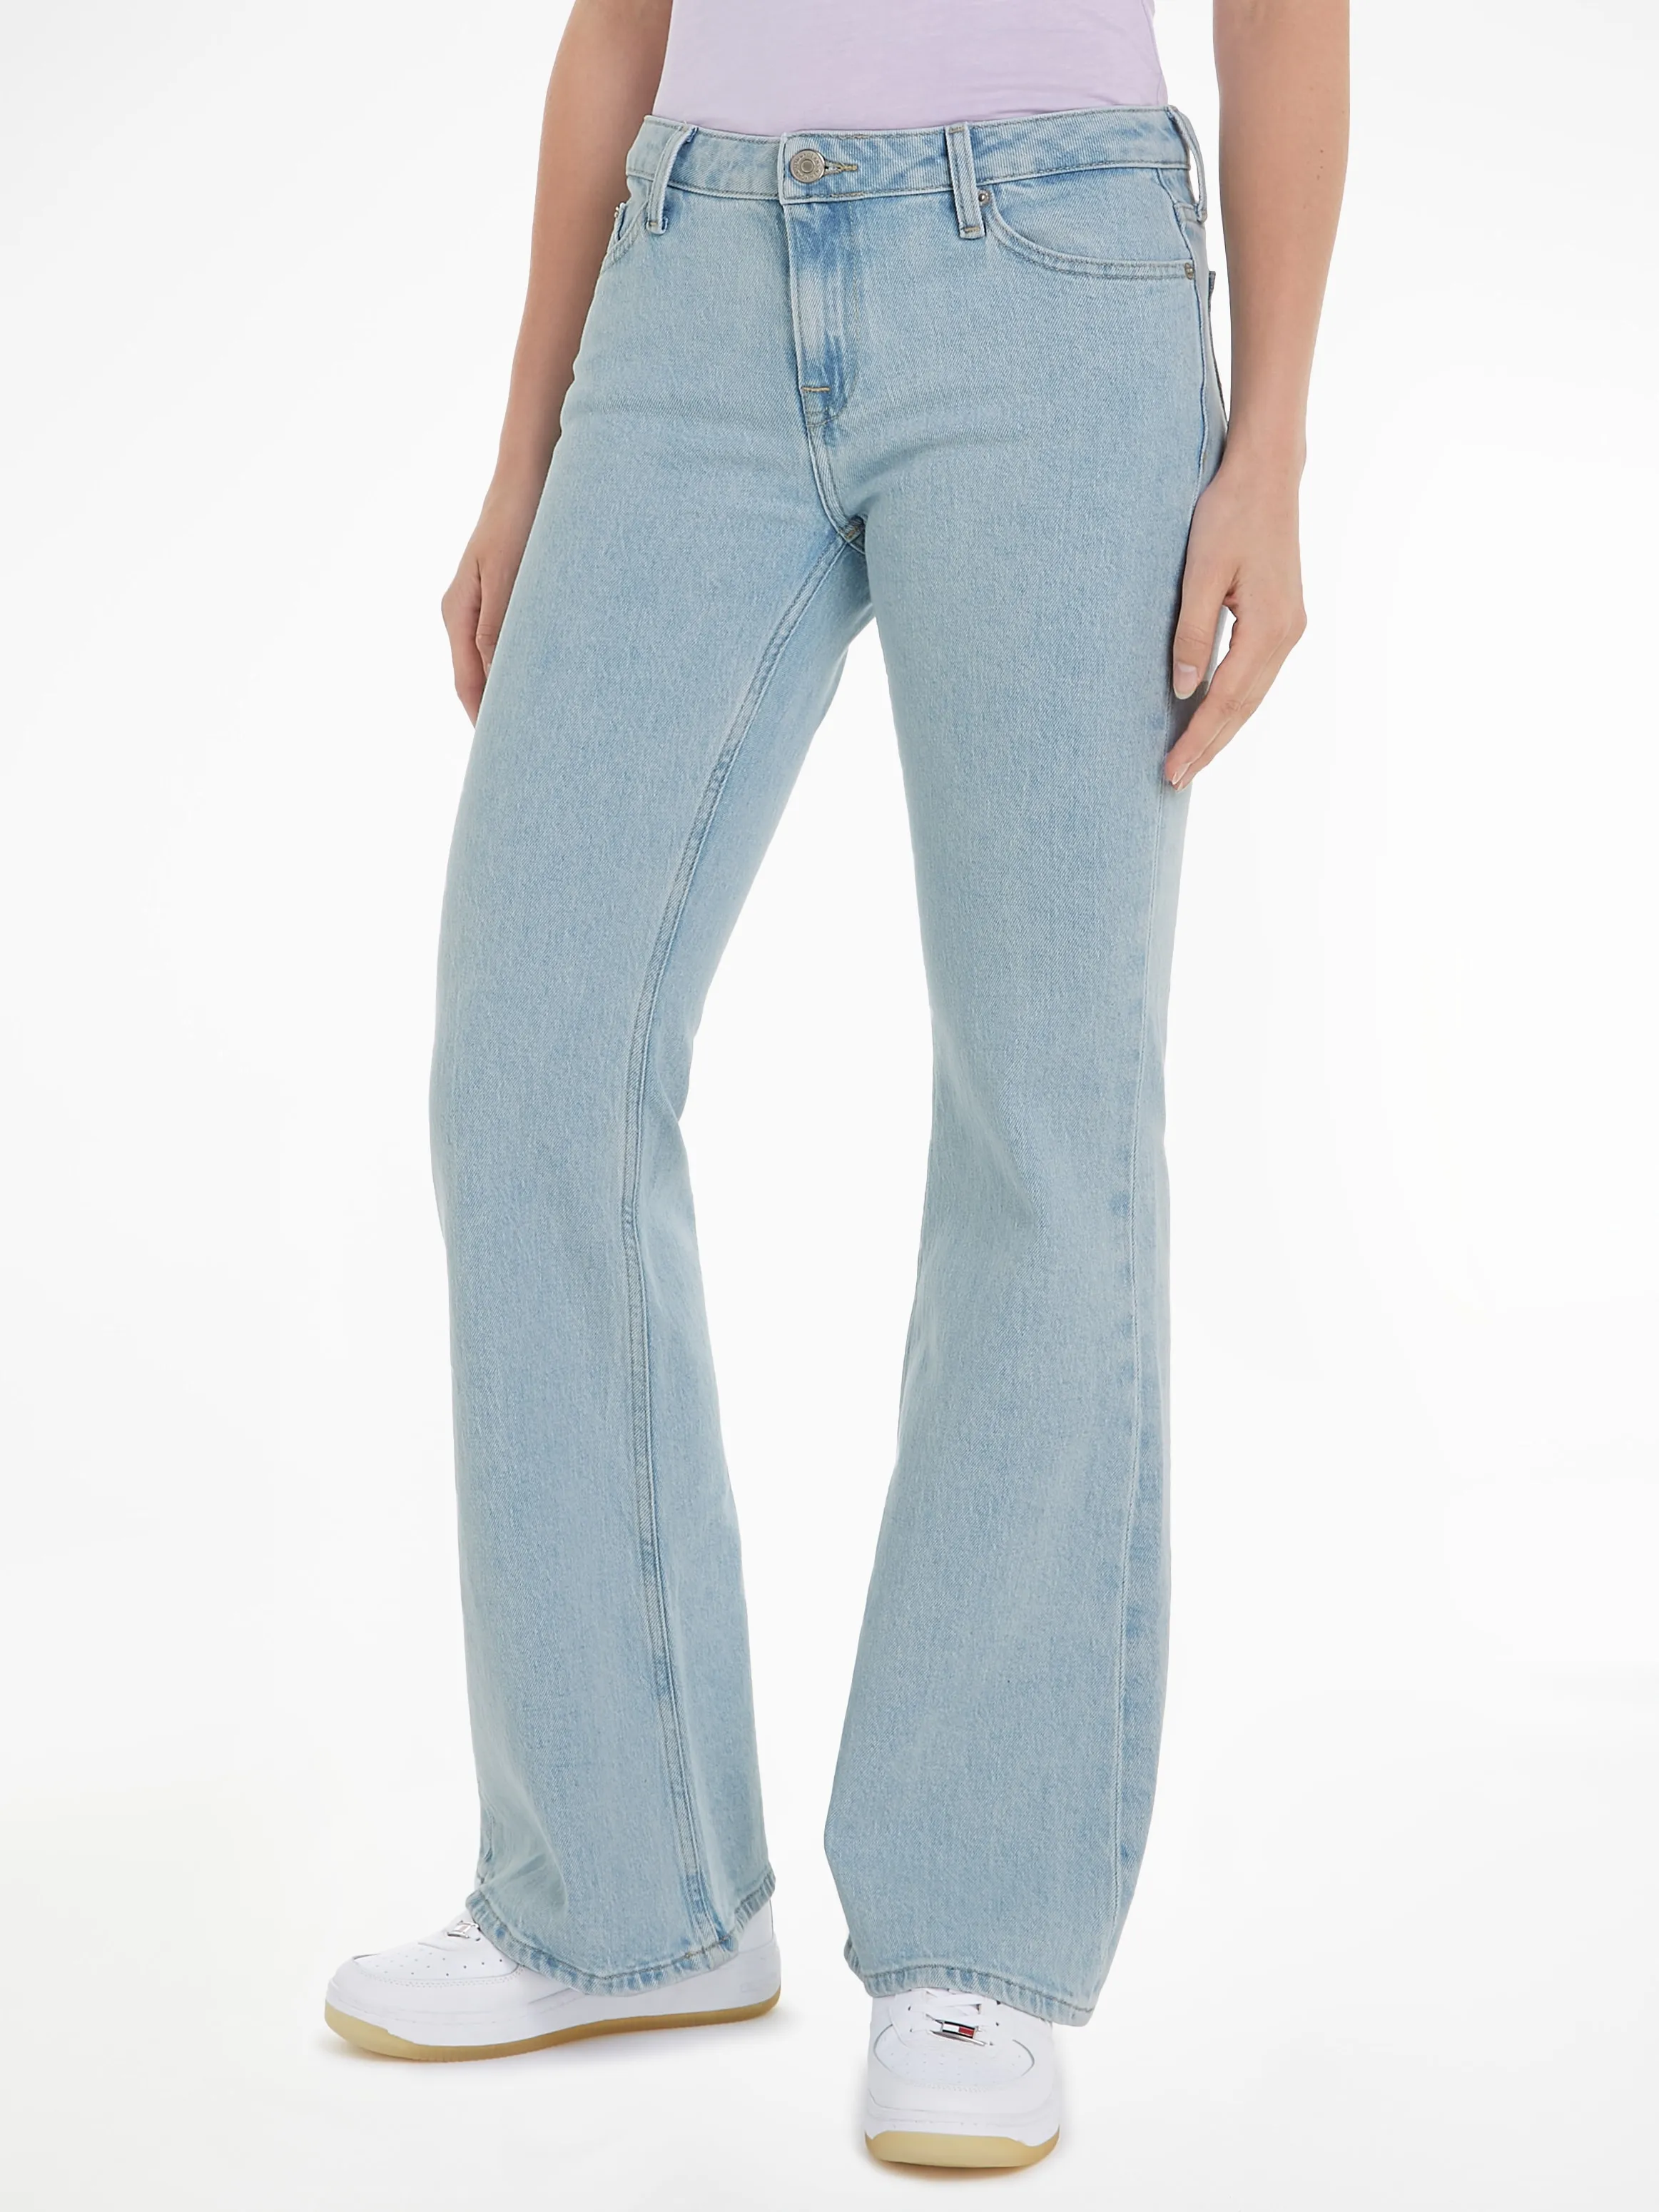 Bequeme Jeans TOMMY JEANS Gr. 34, Länge 30, blau (denim light) Damen Jeans Bootcut mit Ledermarkenlabel